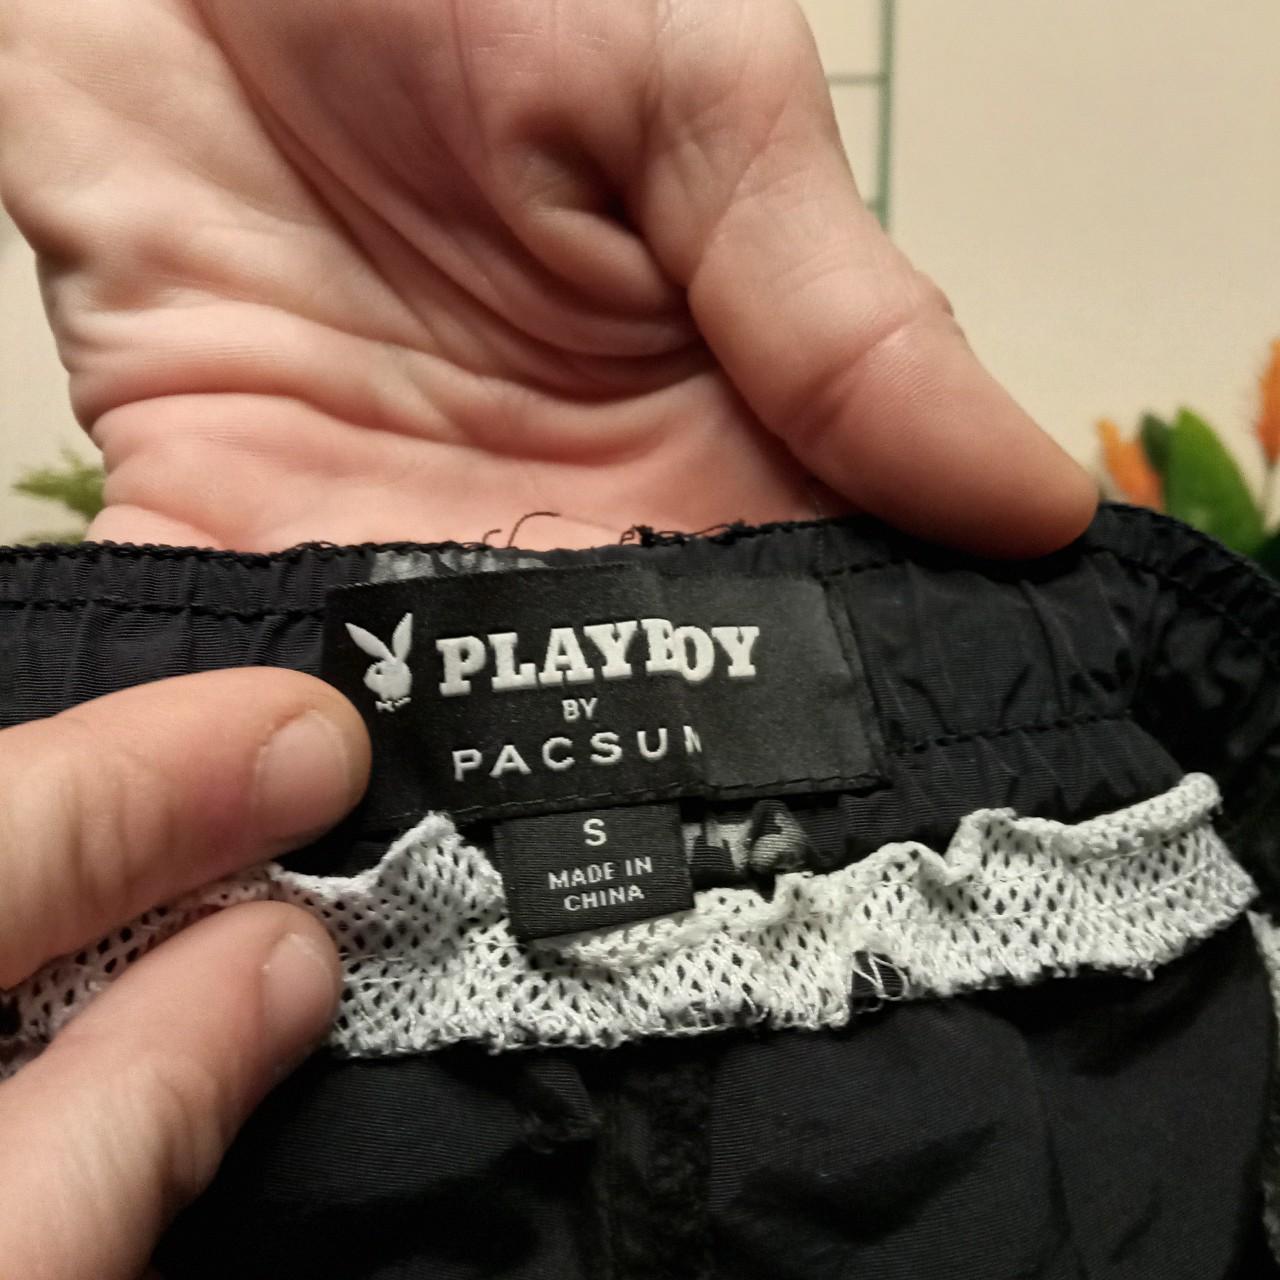 pacsun playboy boxers size large dm before - Depop